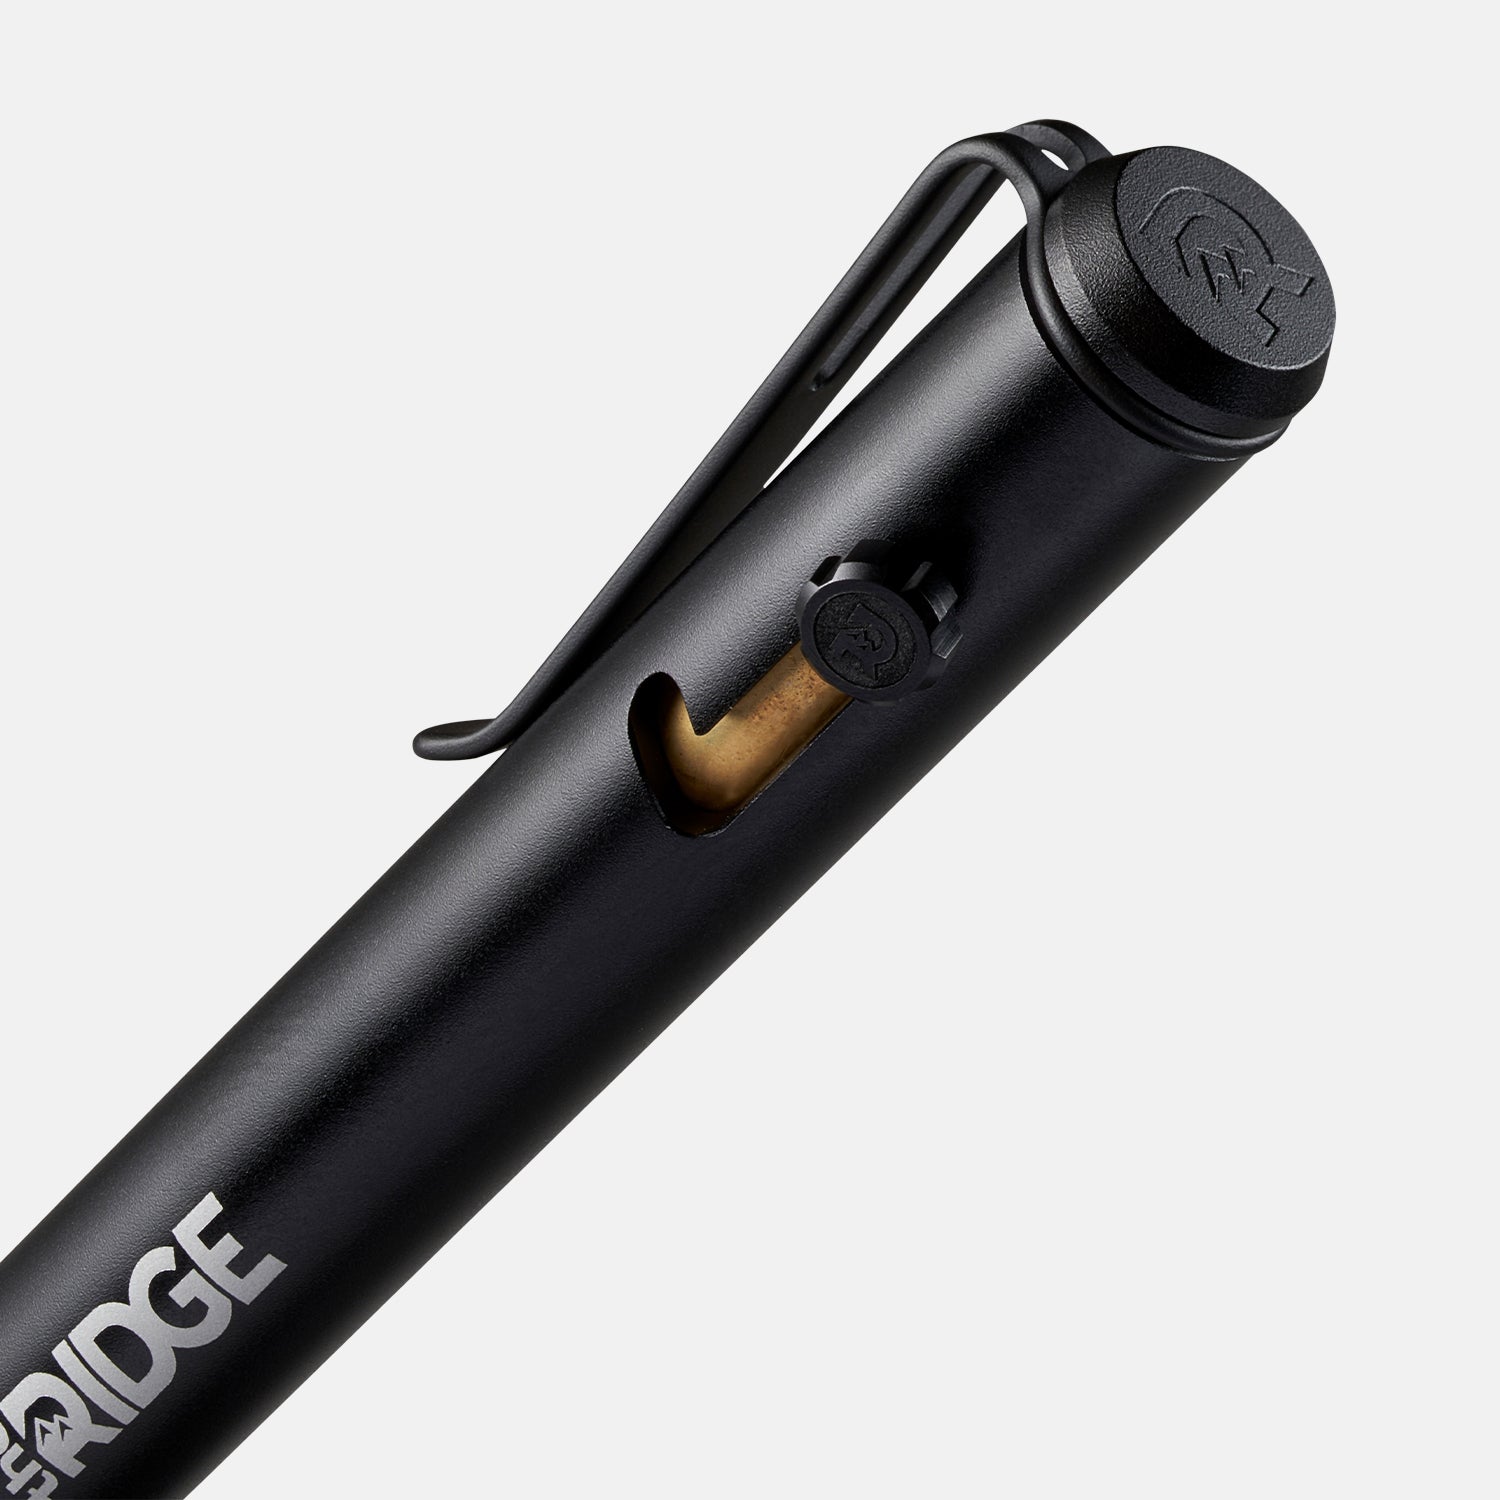 Bolt Action Pen - Black - Knurled Textured Grip // The Ridge